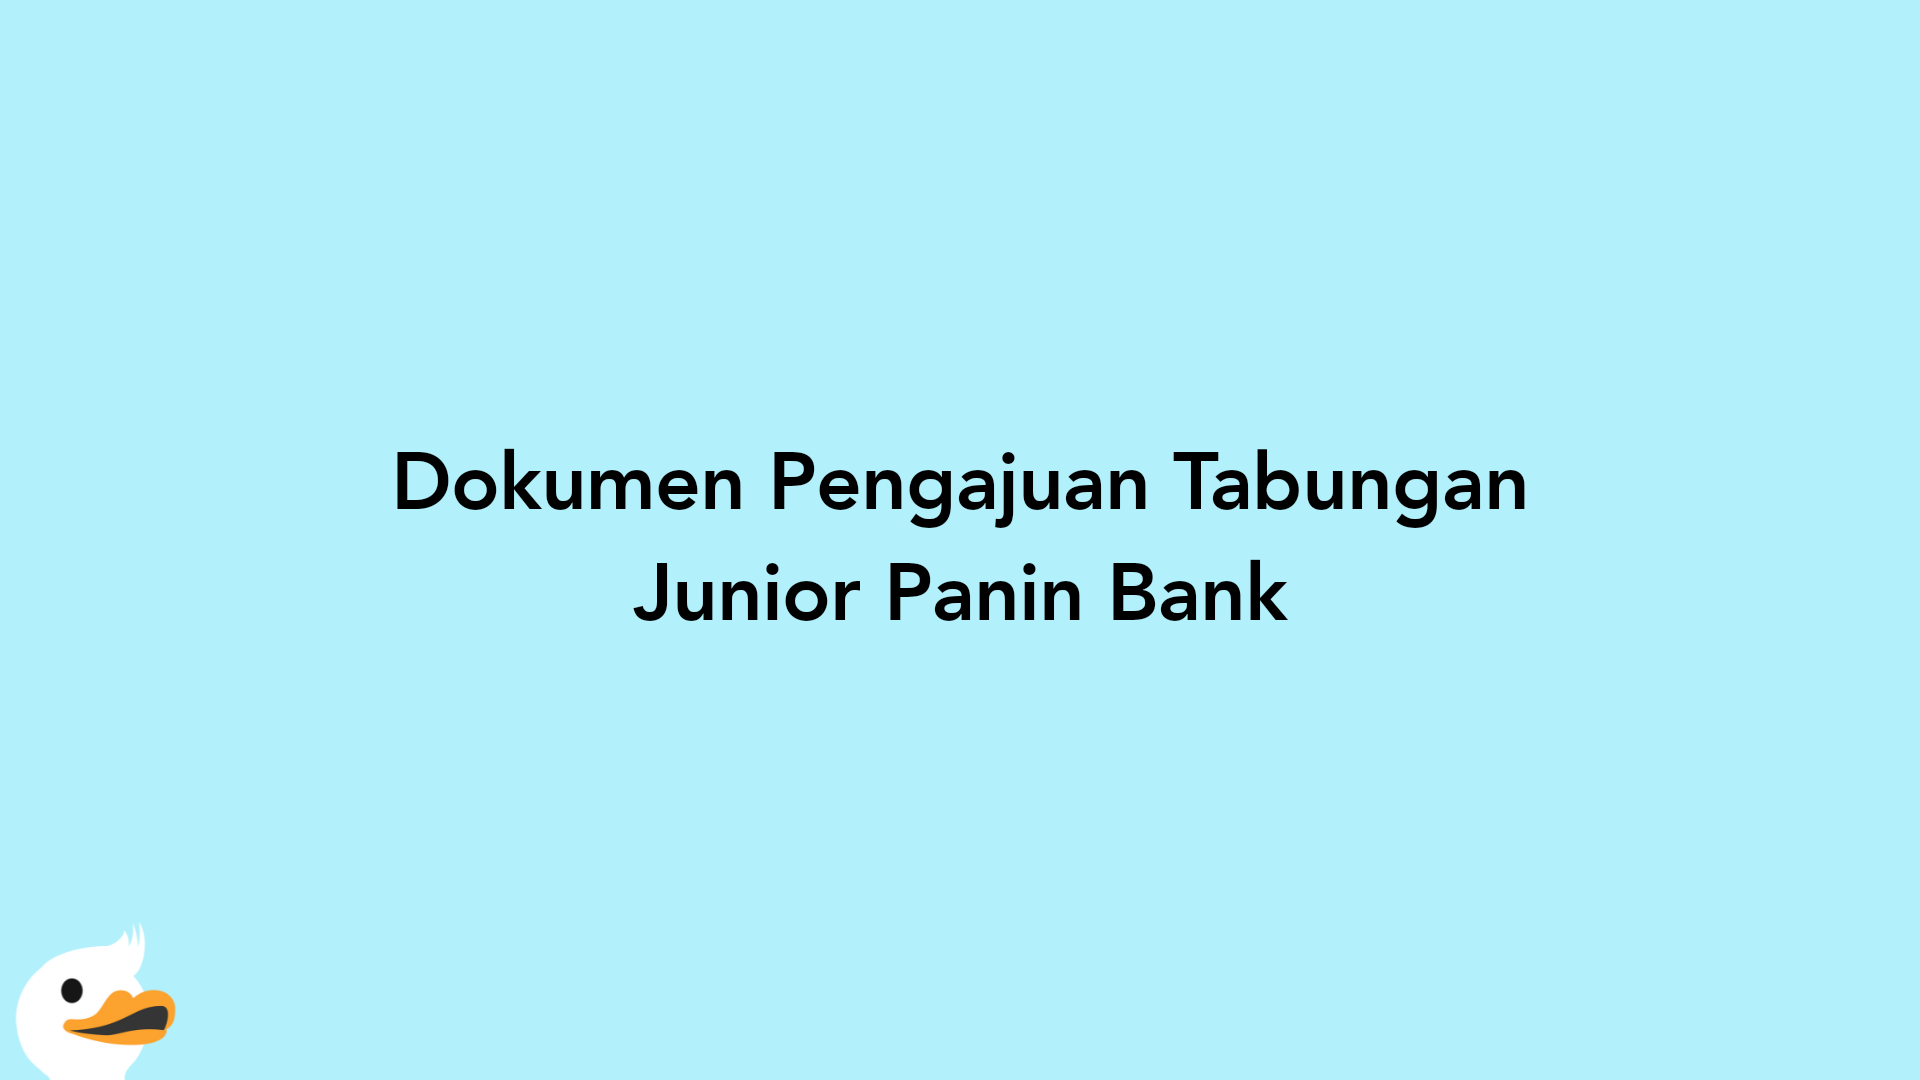 Dokumen Pengajuan Tabungan Junior Panin Bank